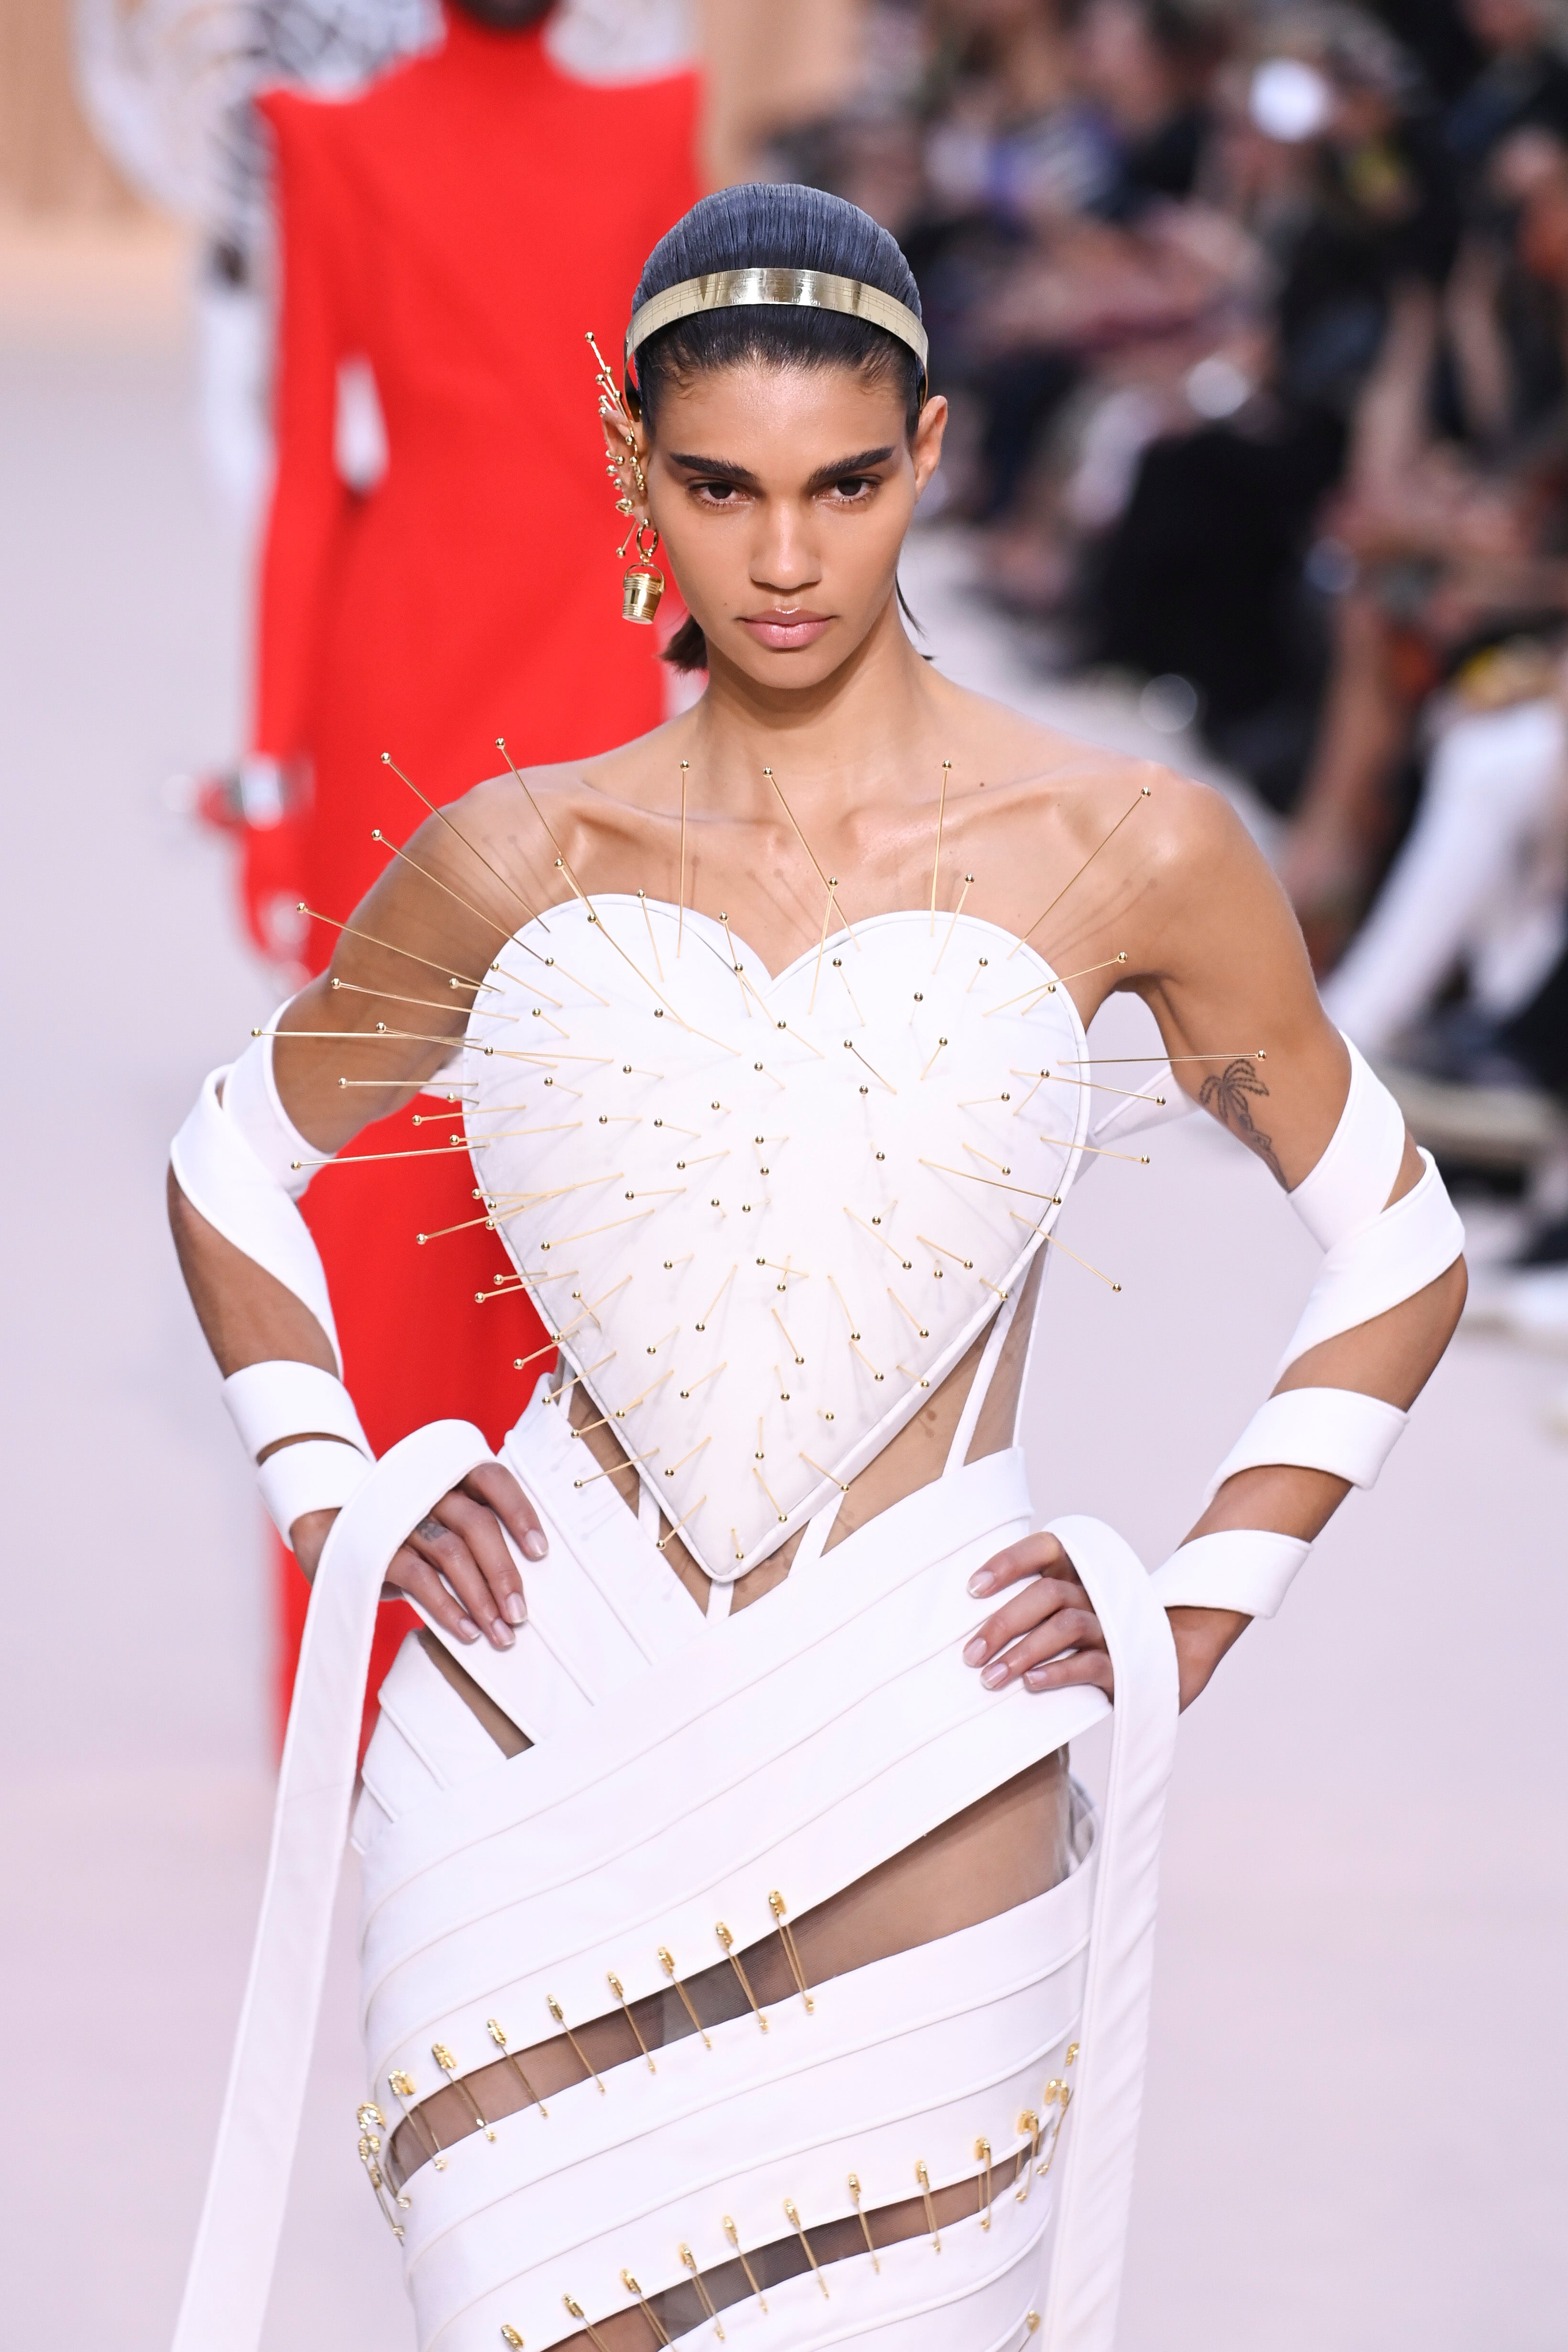 Jean Paul Gaultier: Fashionistas split over 'unintentional' safety